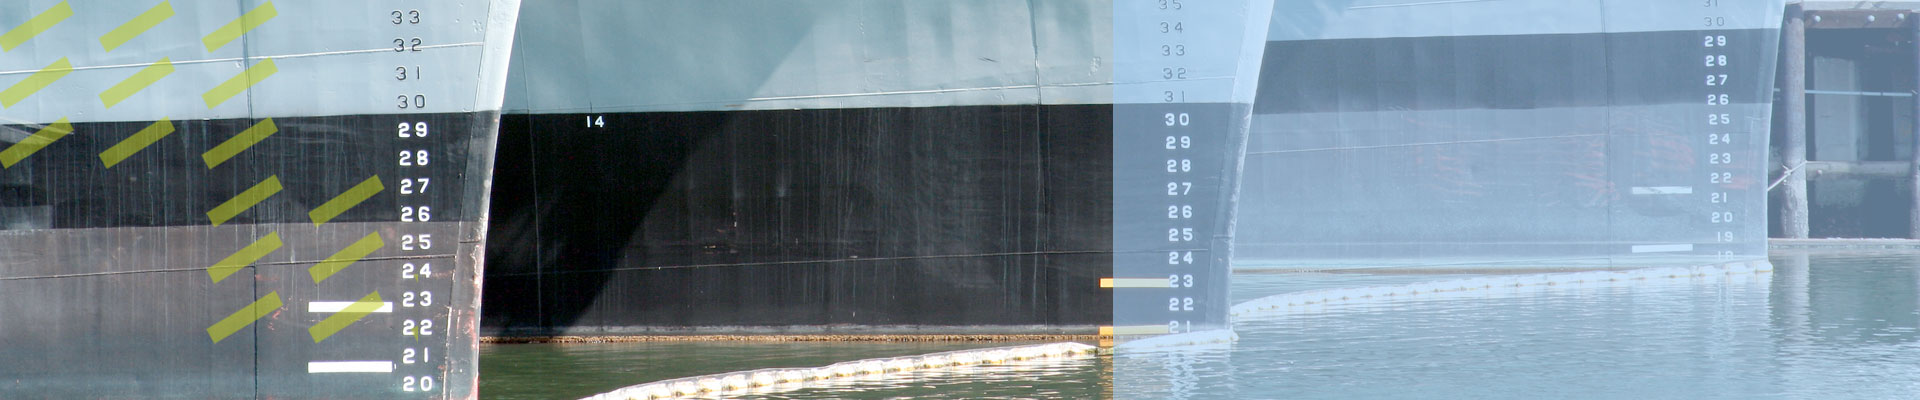 backround image of three navy ship hulls docked in a row